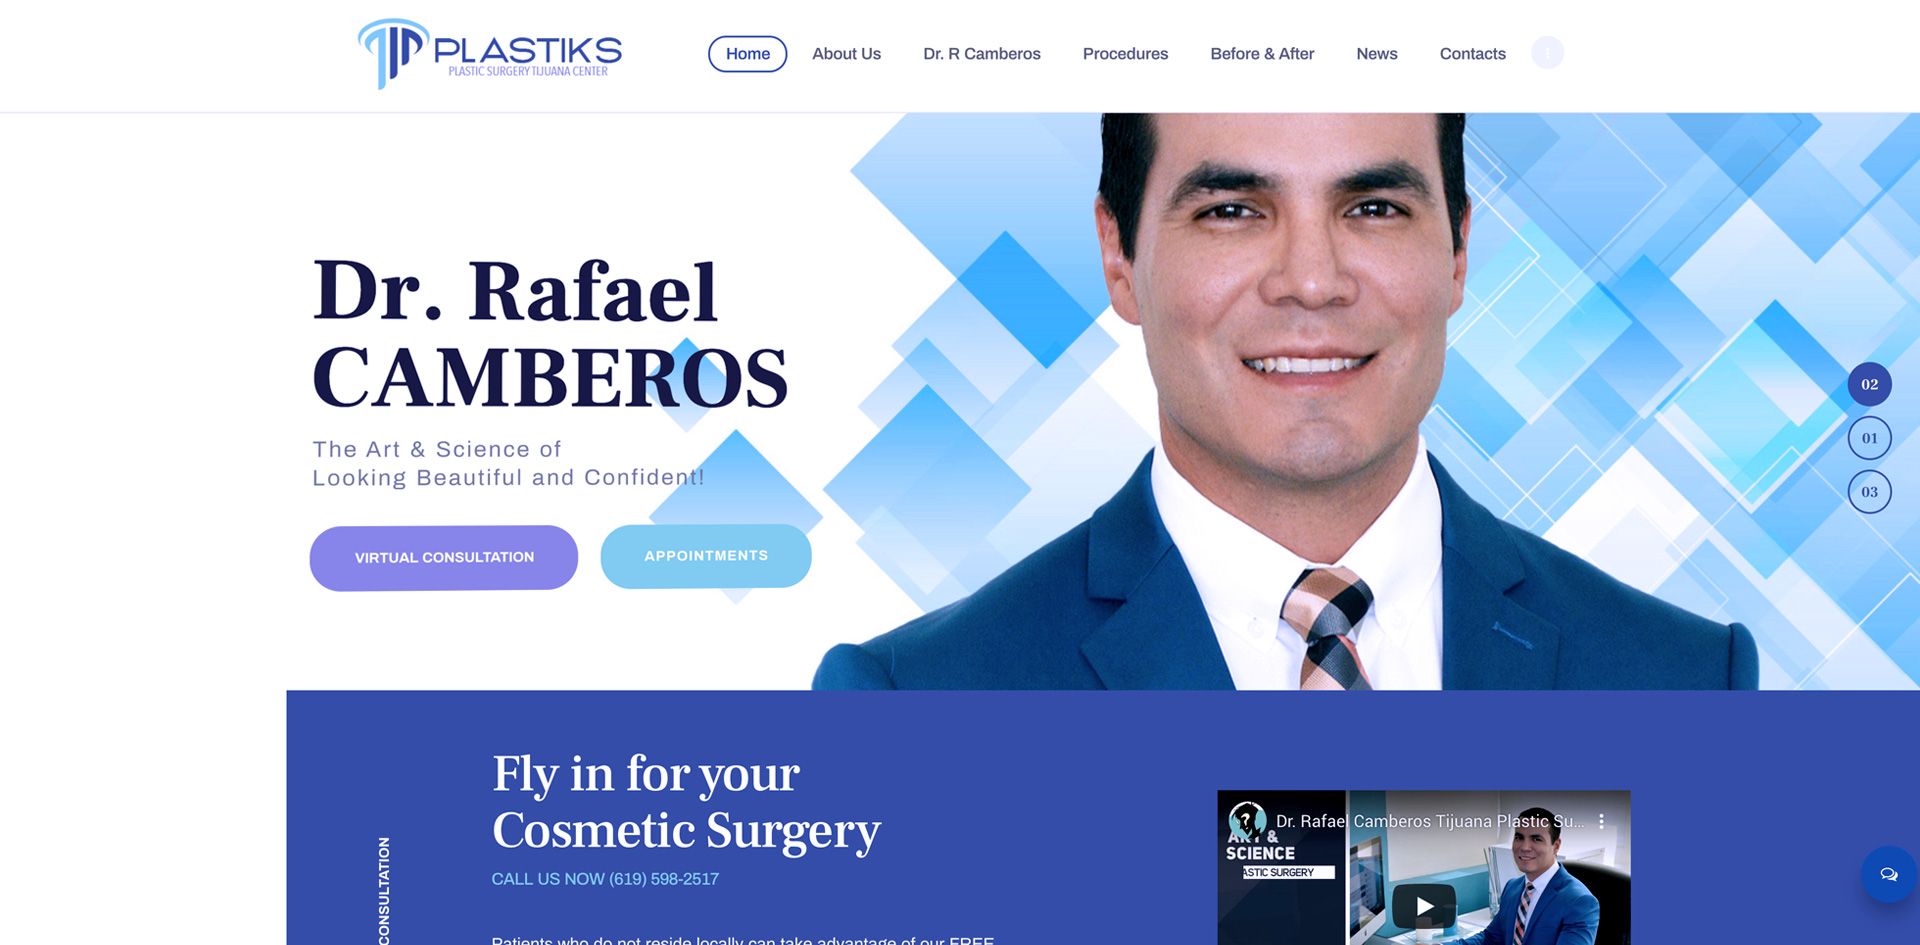 At Plastic Surgery Tijuana, board-certified plastic surgeon, Dr. Rafael Camberos Solis offers cosmetic plastic surgery at his practice in Tijuana, Mexico.